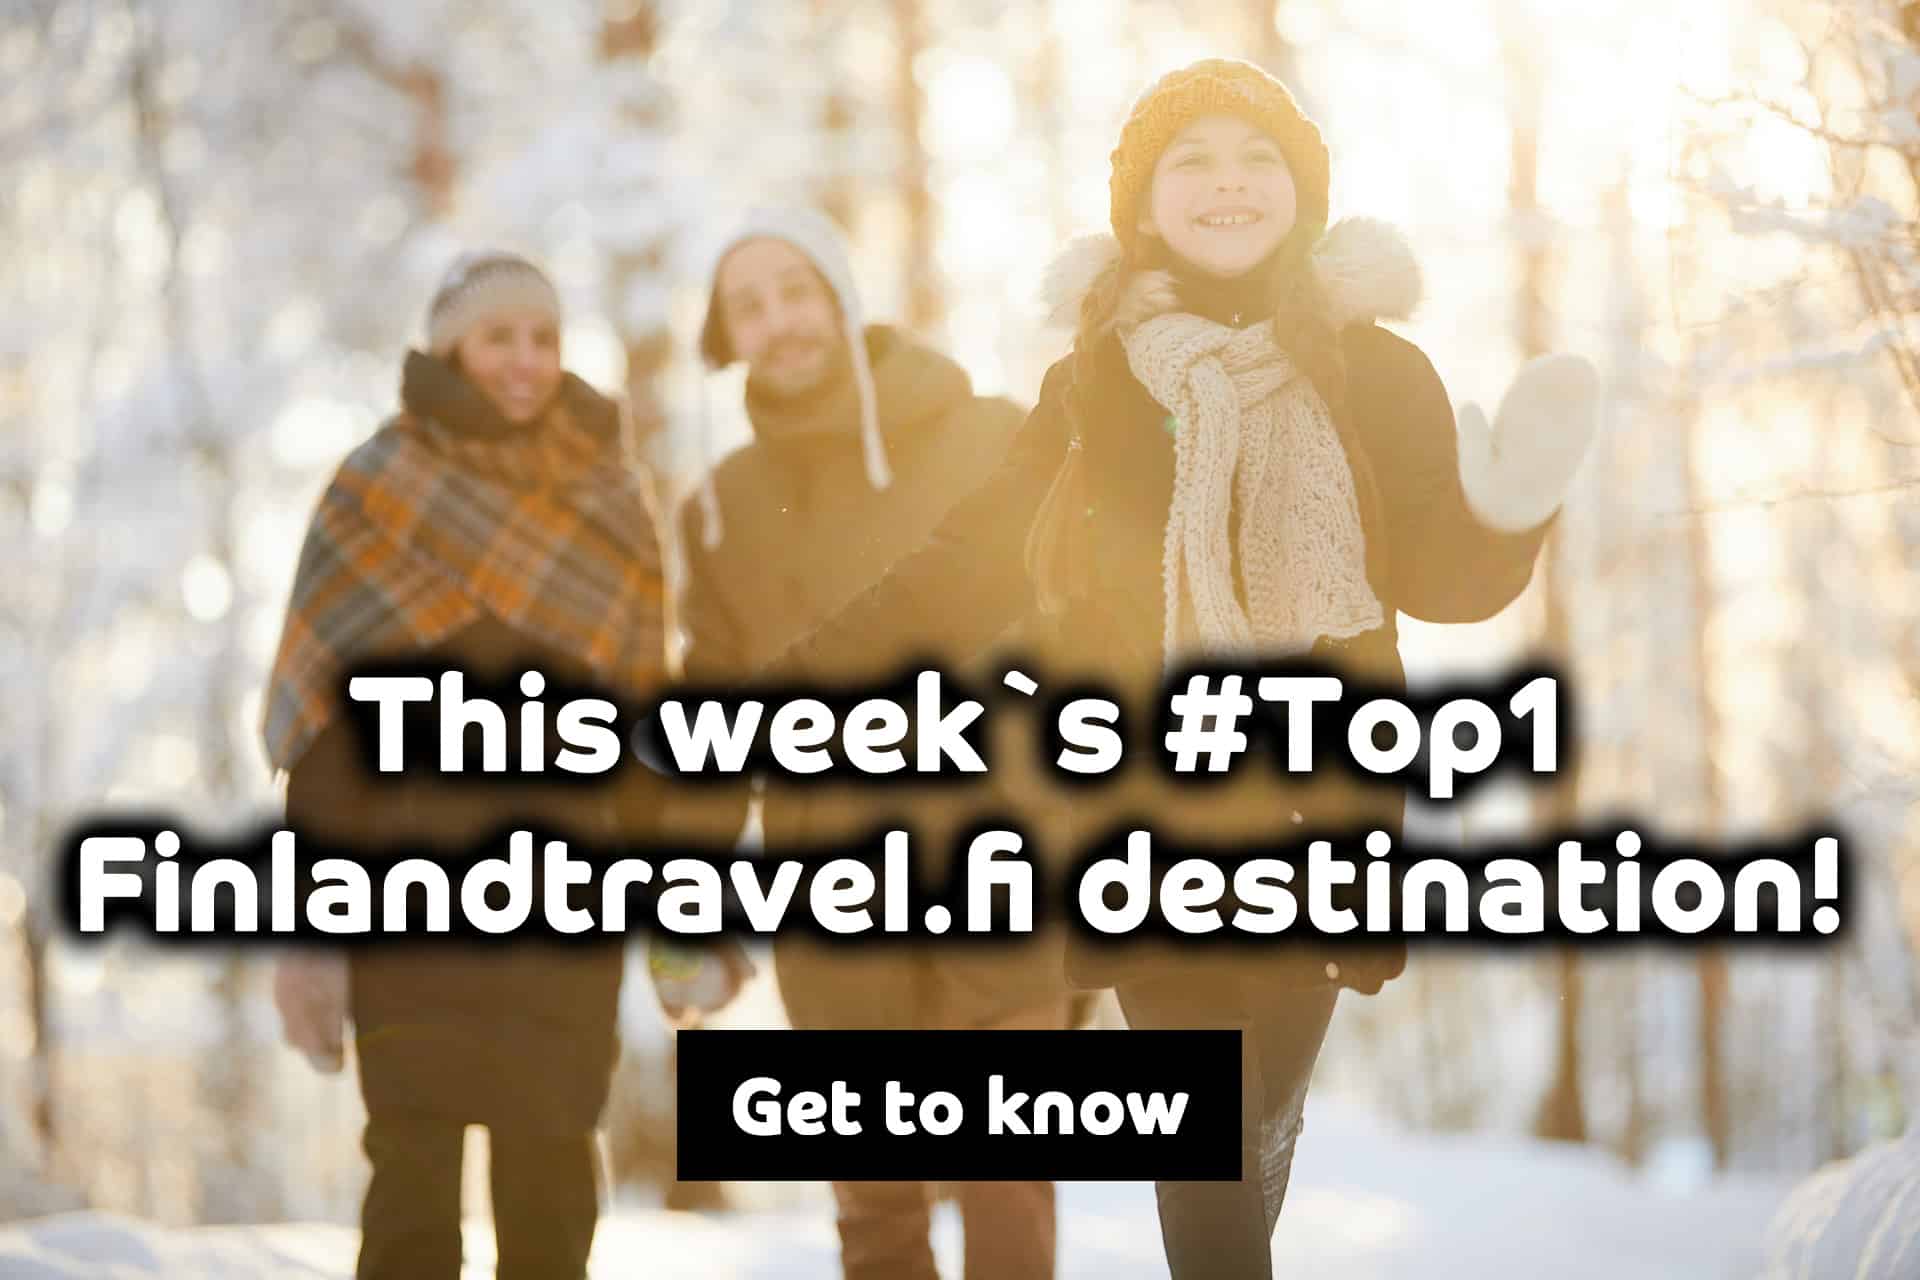 This week's #Top1 finlandtravel.fi destination